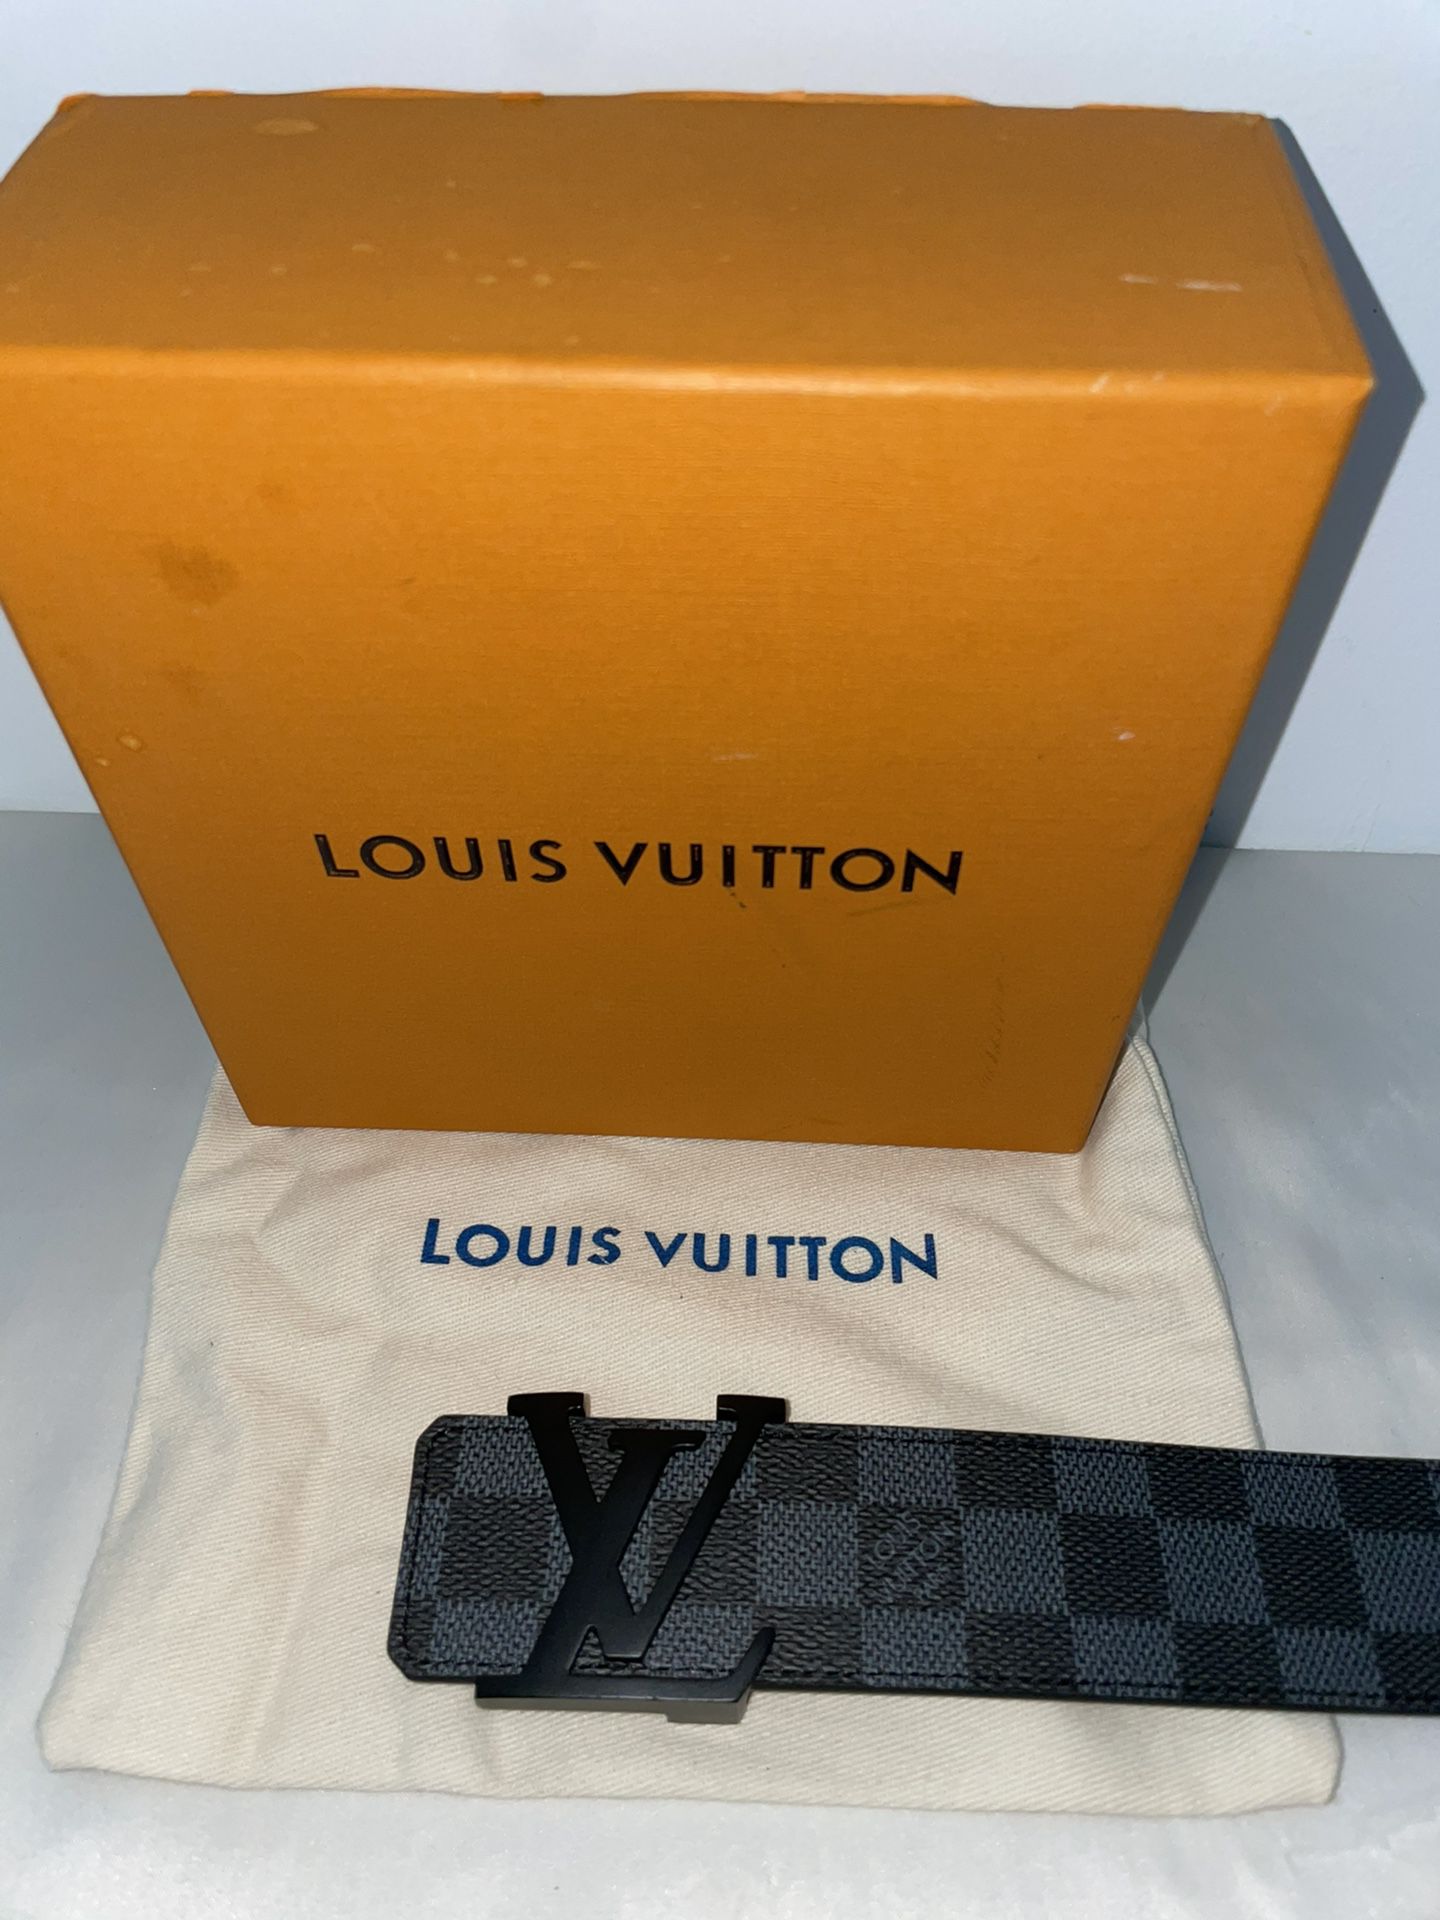 Sold at Auction: 3 Louis Vuitton Items, incl. Metropolis Flat Ranger Boots,  Packing Cube PM, Logo Belt